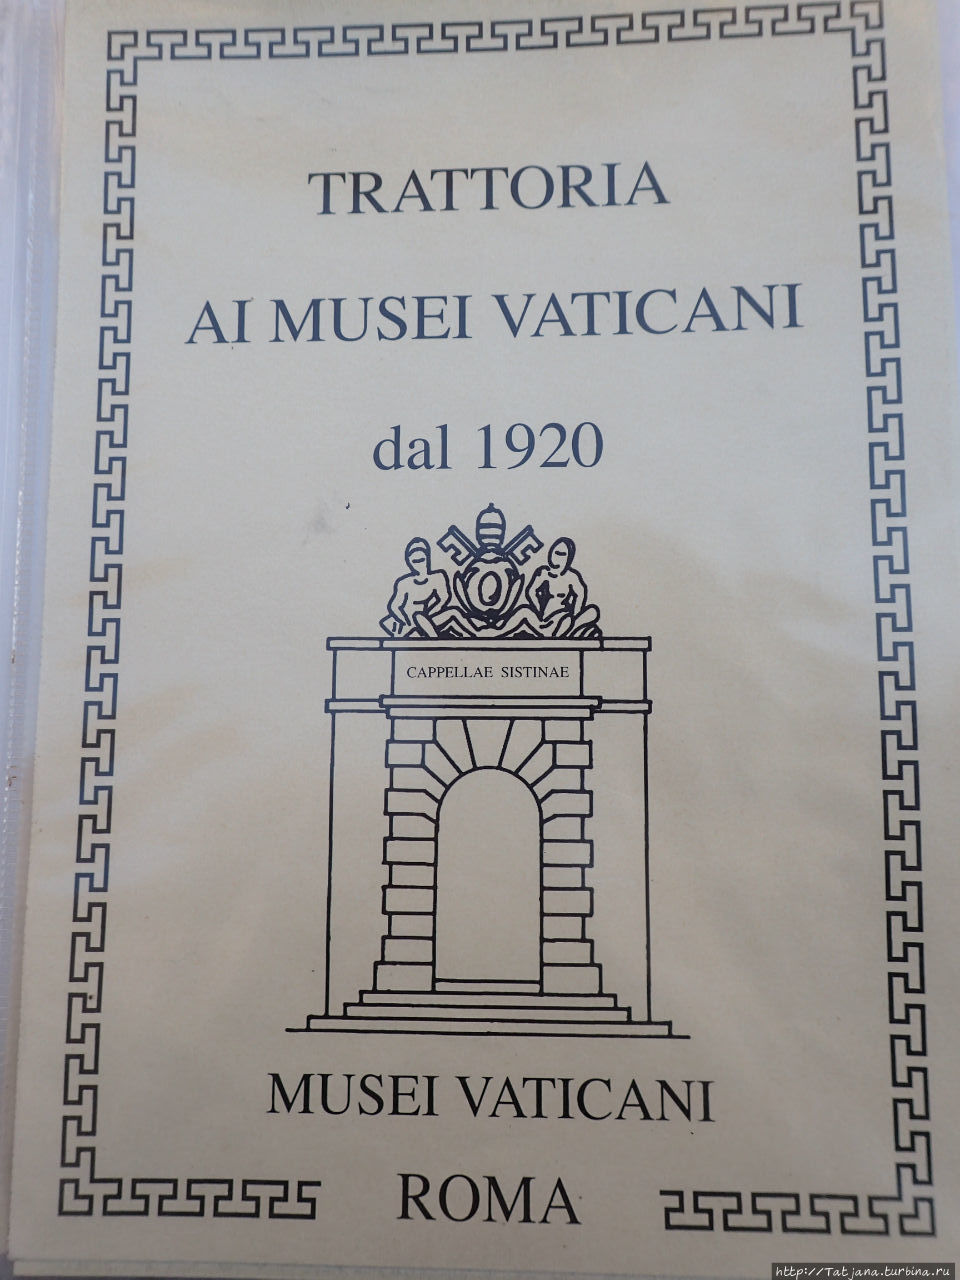 Ресторан  Музеи Ватикана Джулио Масса / Ristorante ai Museu in Roma dal 1920